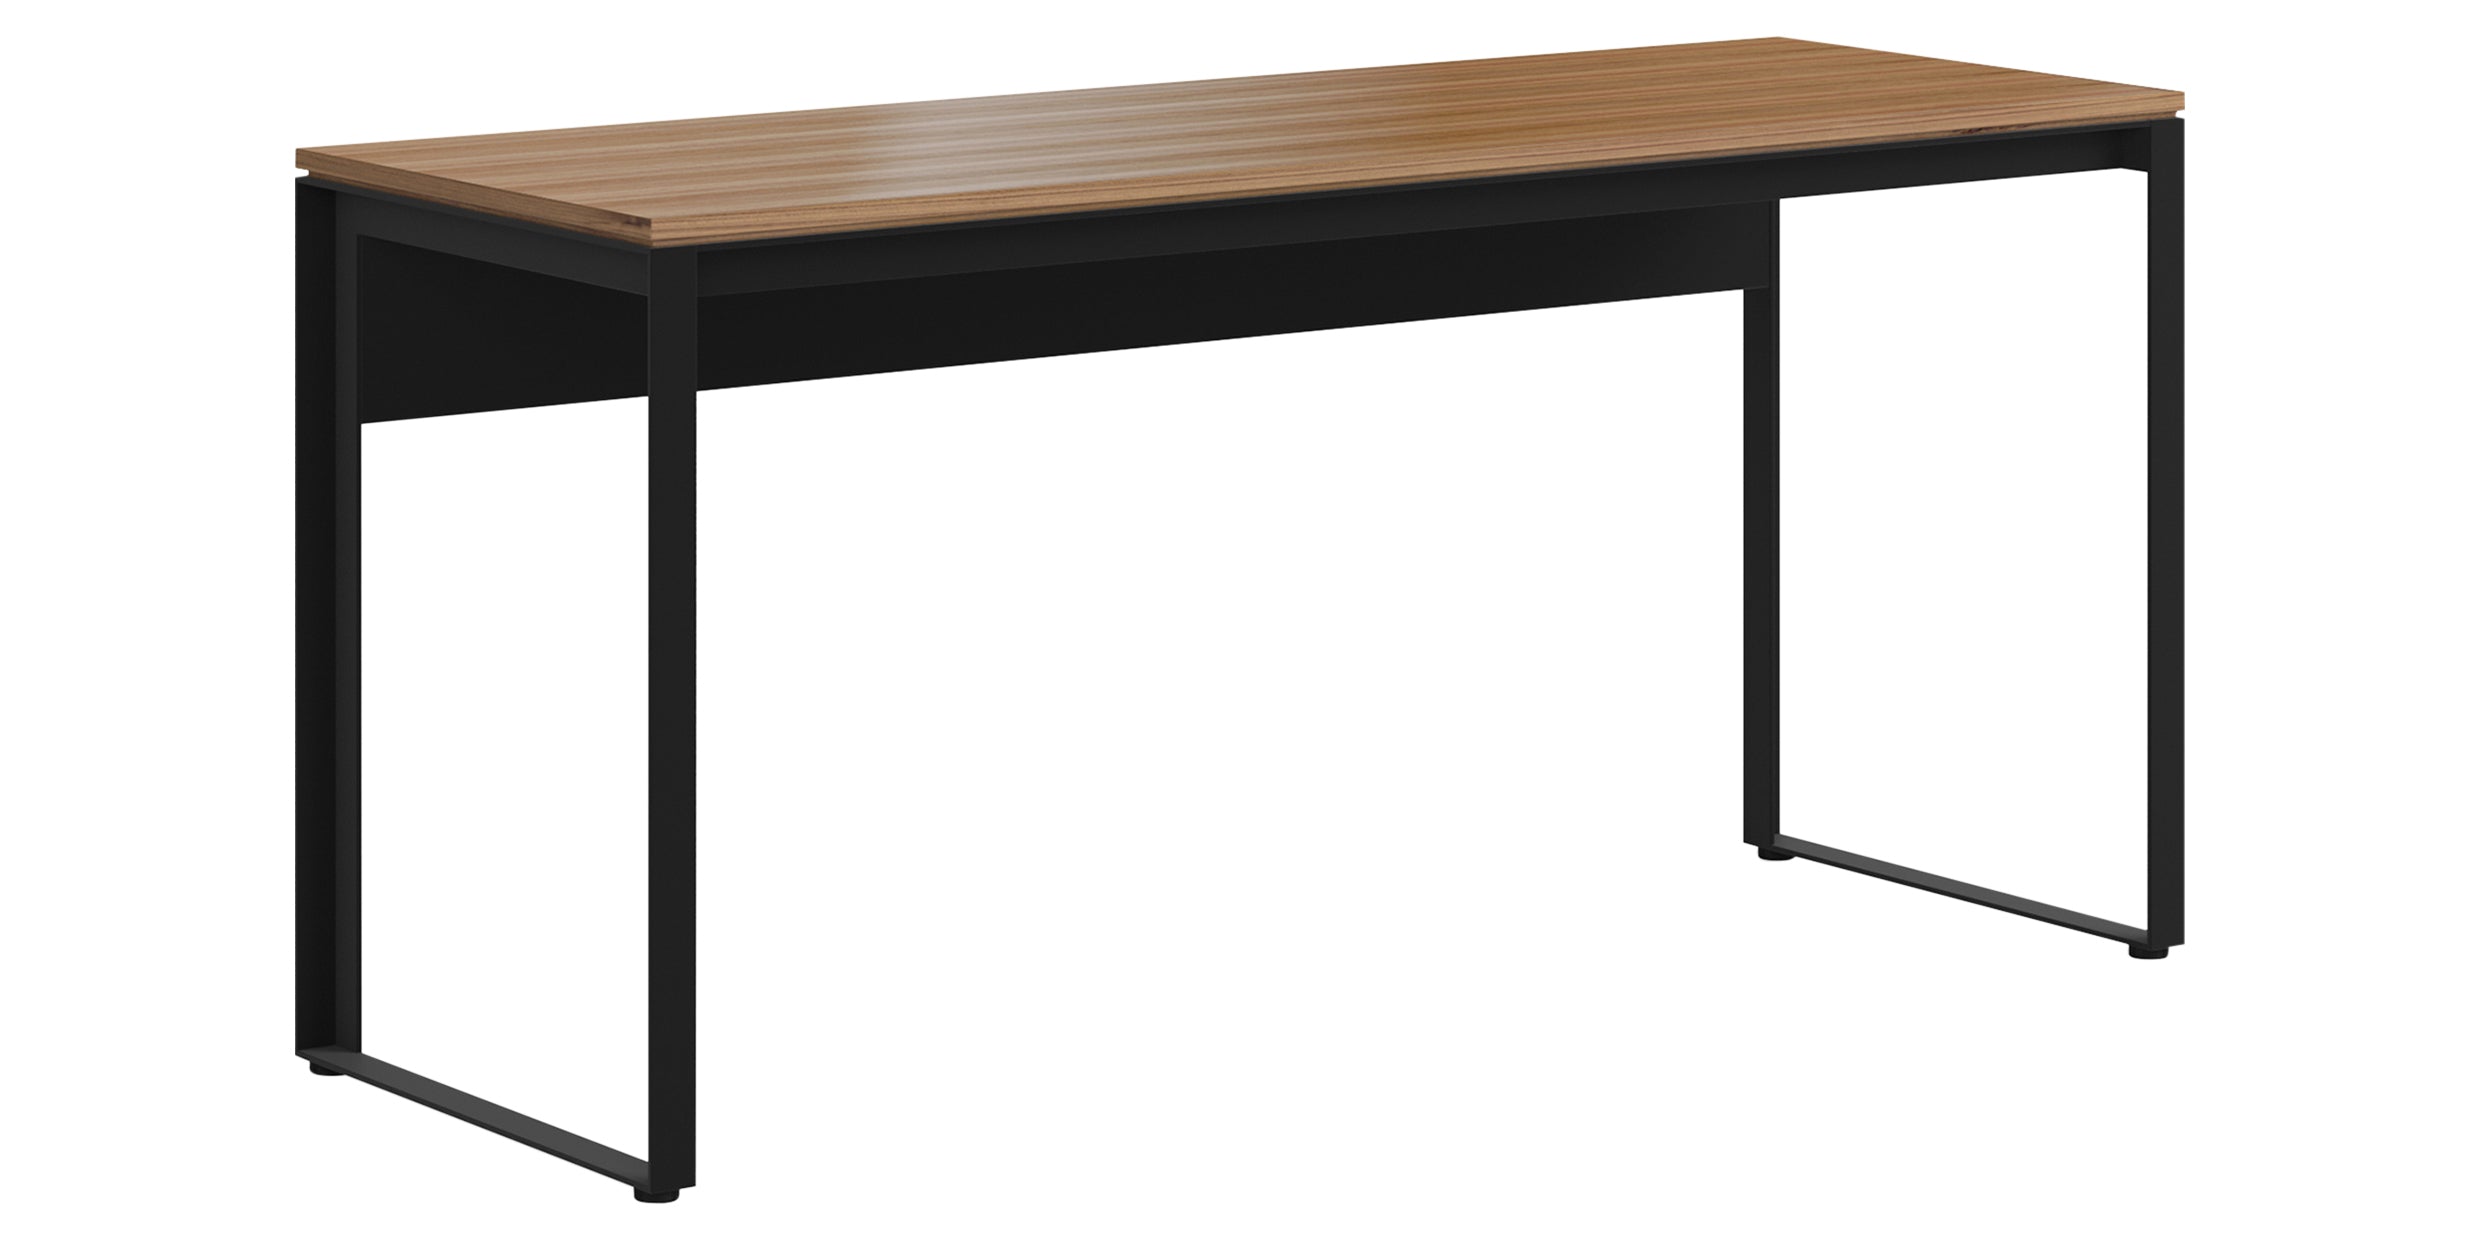 Natural Walnut Veneer & Black Steel | BDI Linea Work Desk | Valley Ridge Furniture